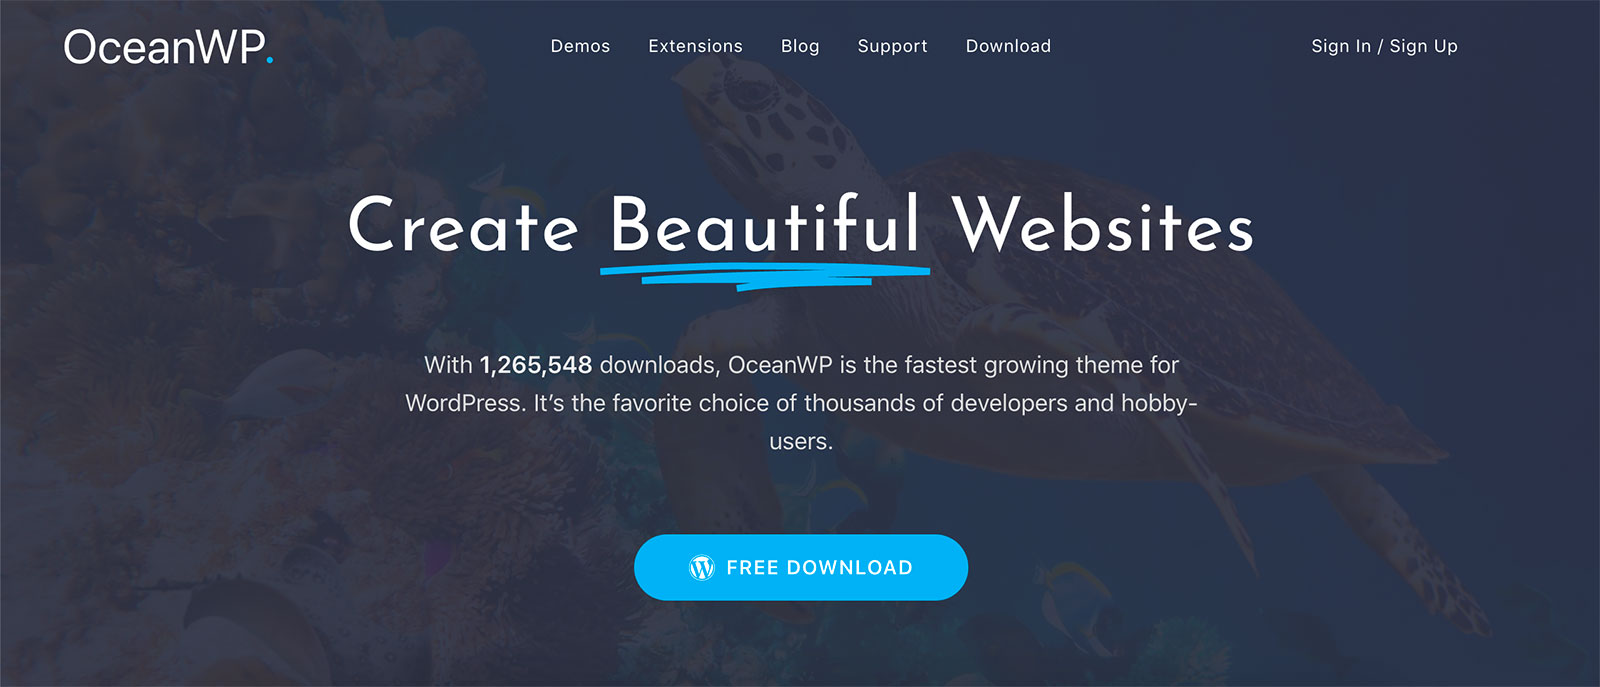 OceanWP WordPress Theme - Homepage